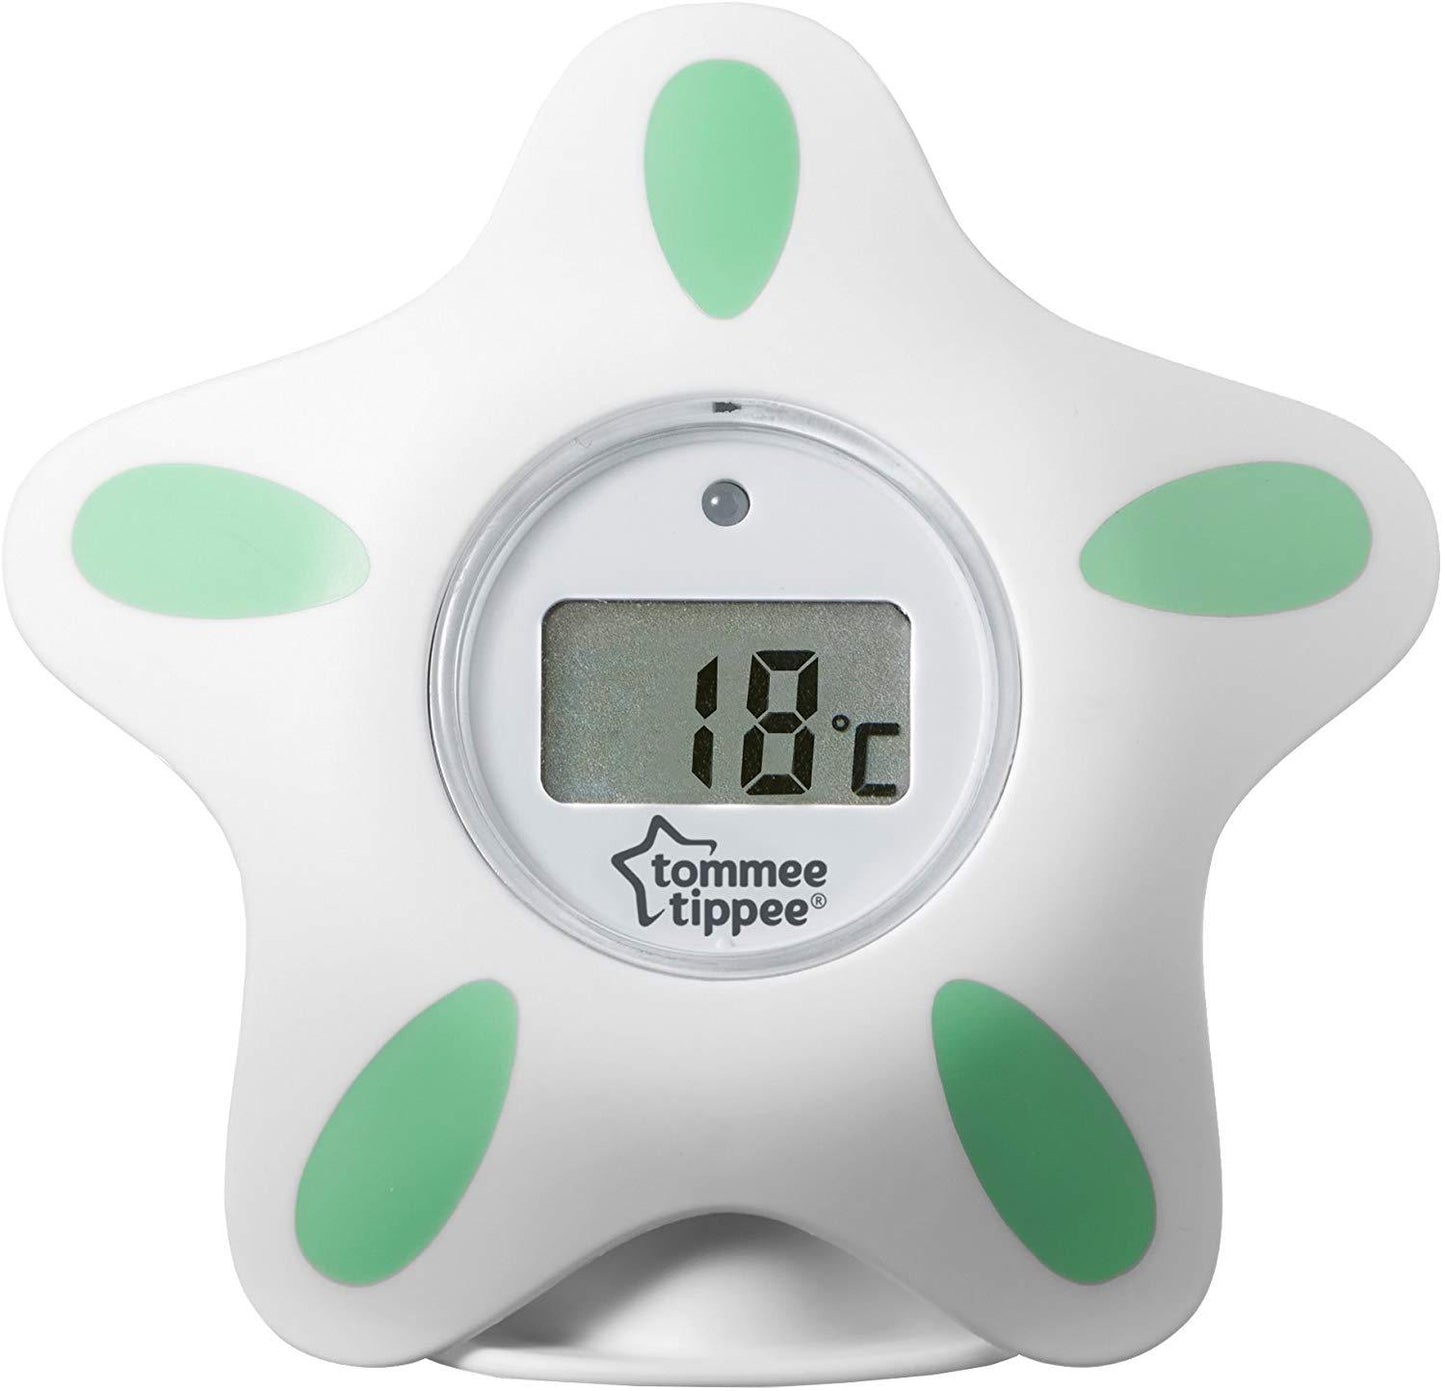 Tommee Tippee Closer to Nature Termometro de Banho e Quarto Anne Claire Baby Store 